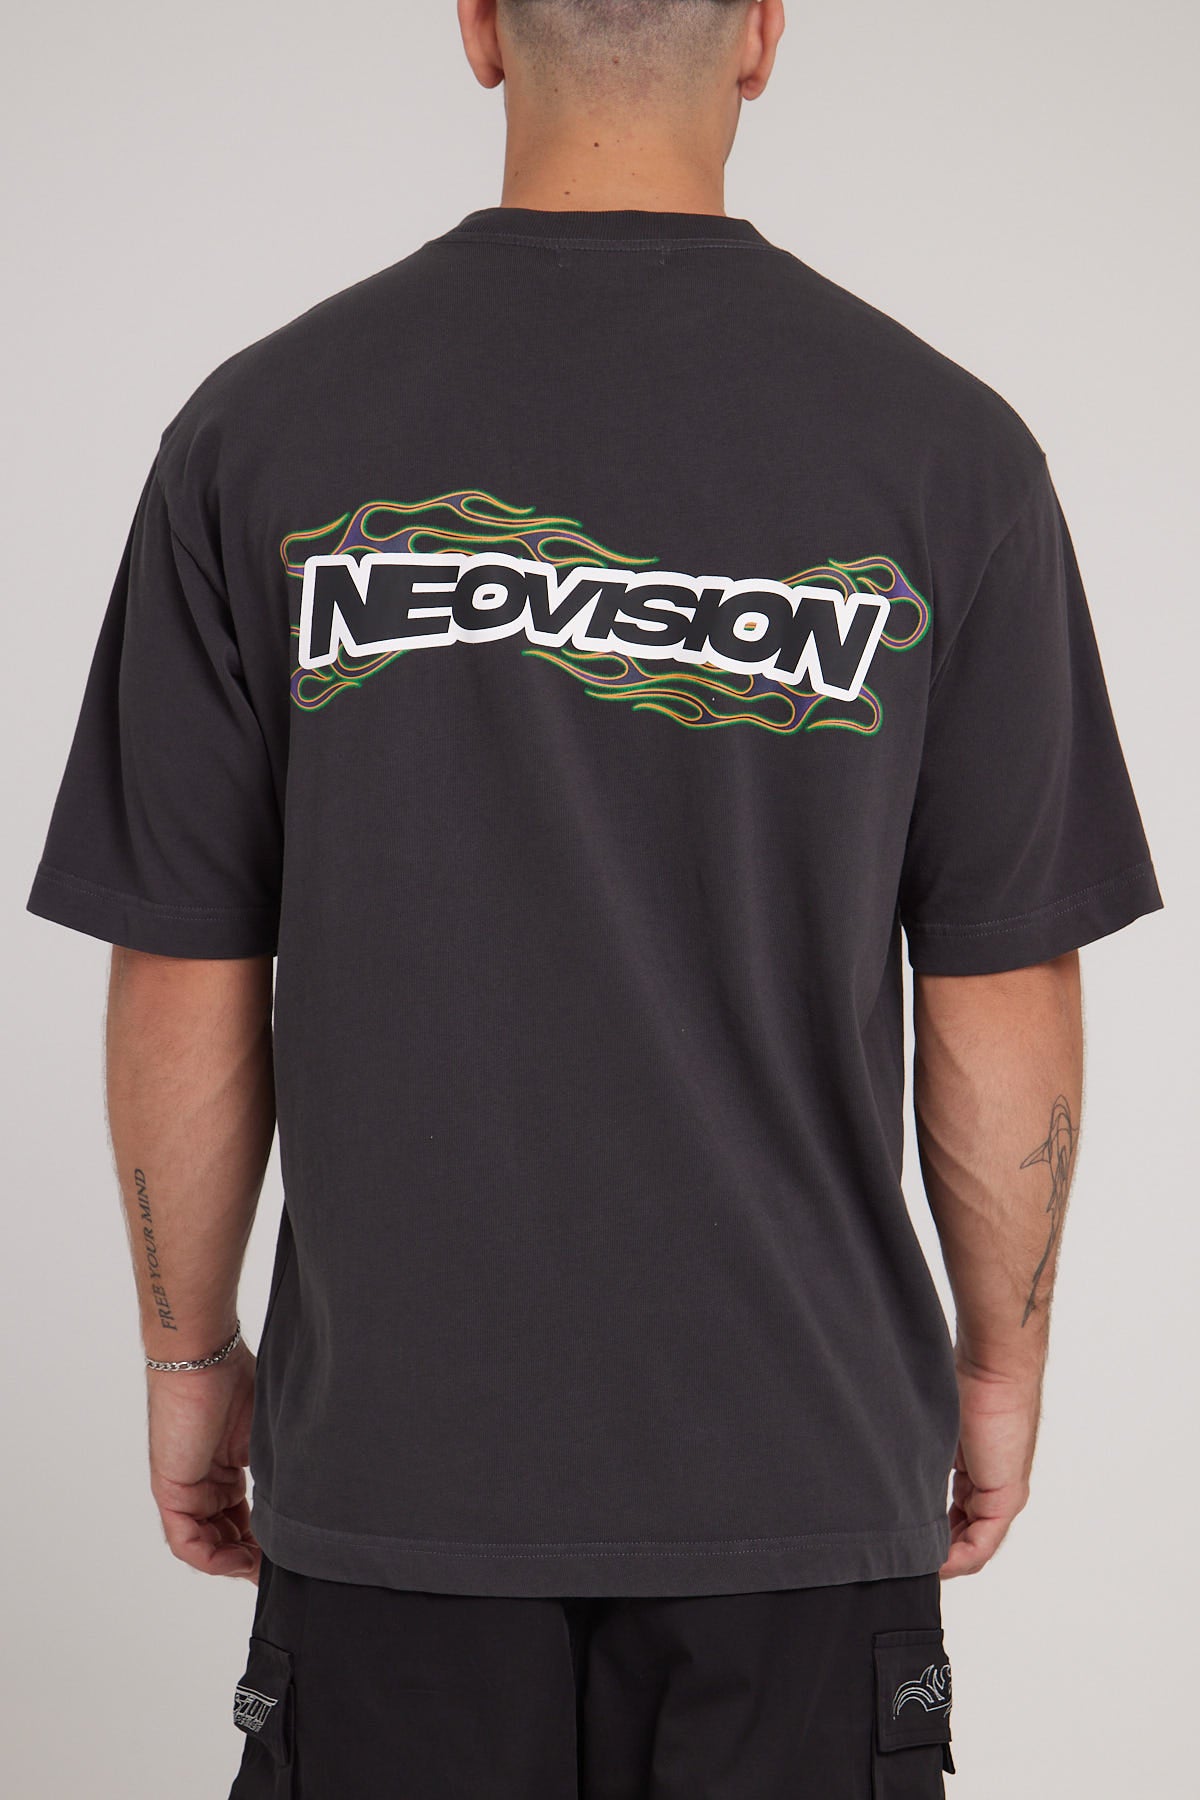 Neovision Twin Turbo Oversize Super Heavy Tee Black